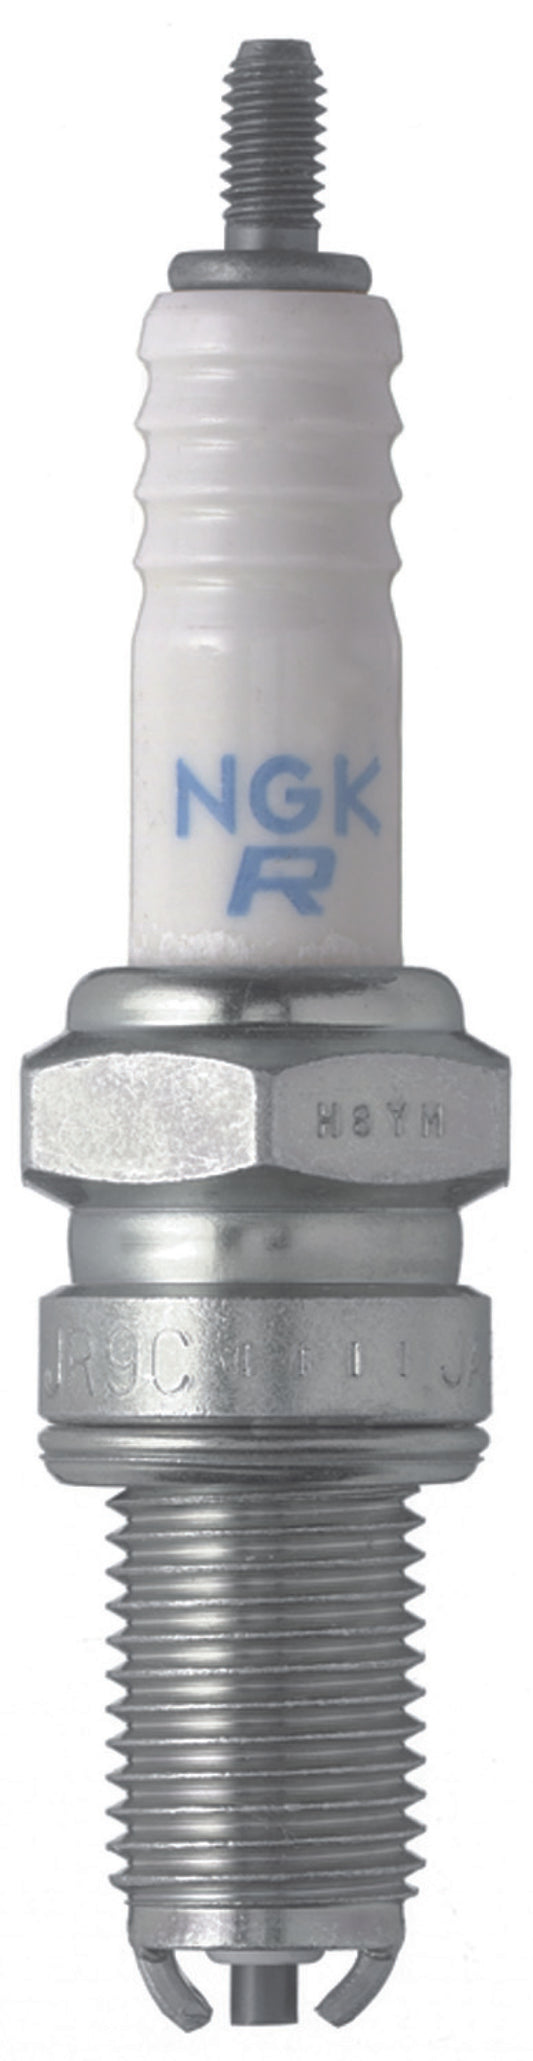 NGK Standard Spark Plug Box of 10 (JR9C)